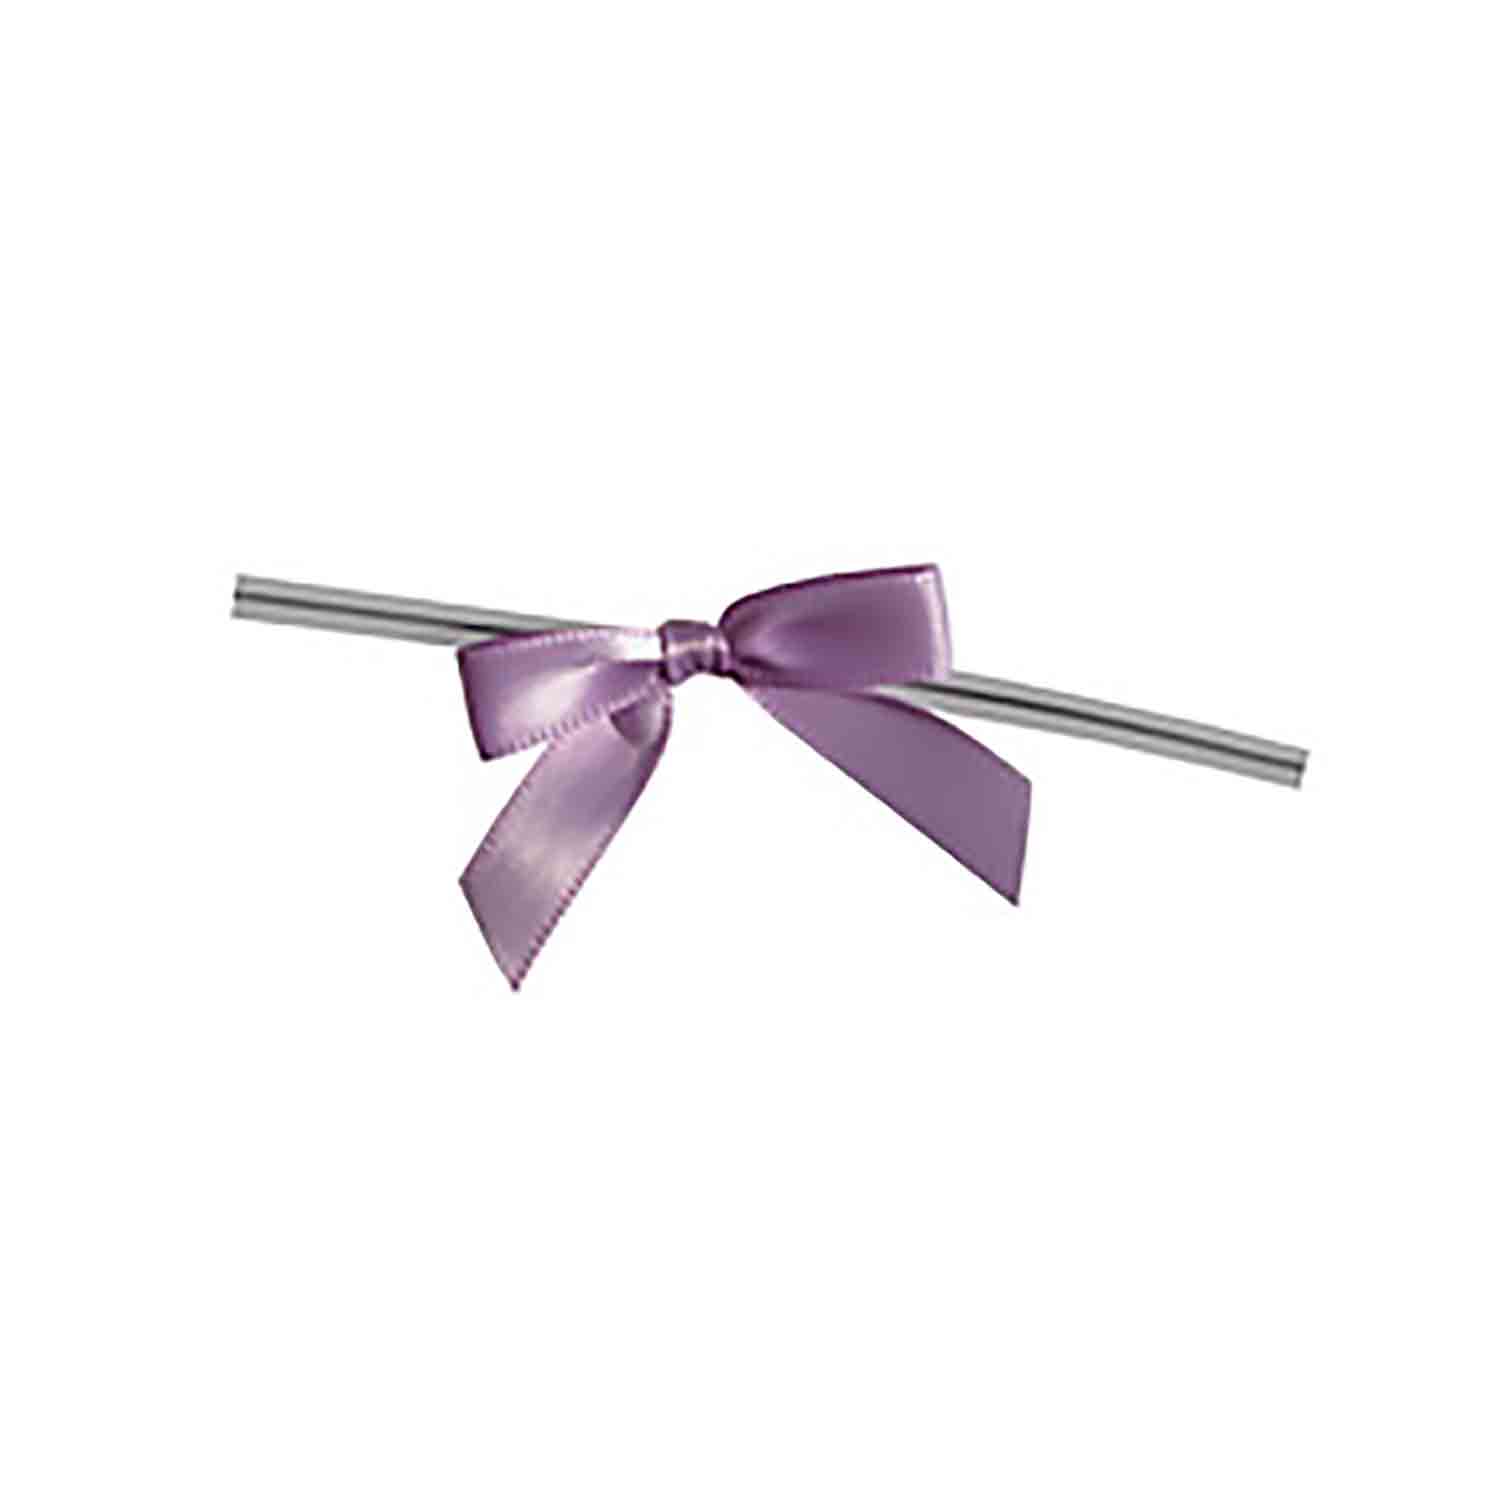 Lavender Twist Tie Bows